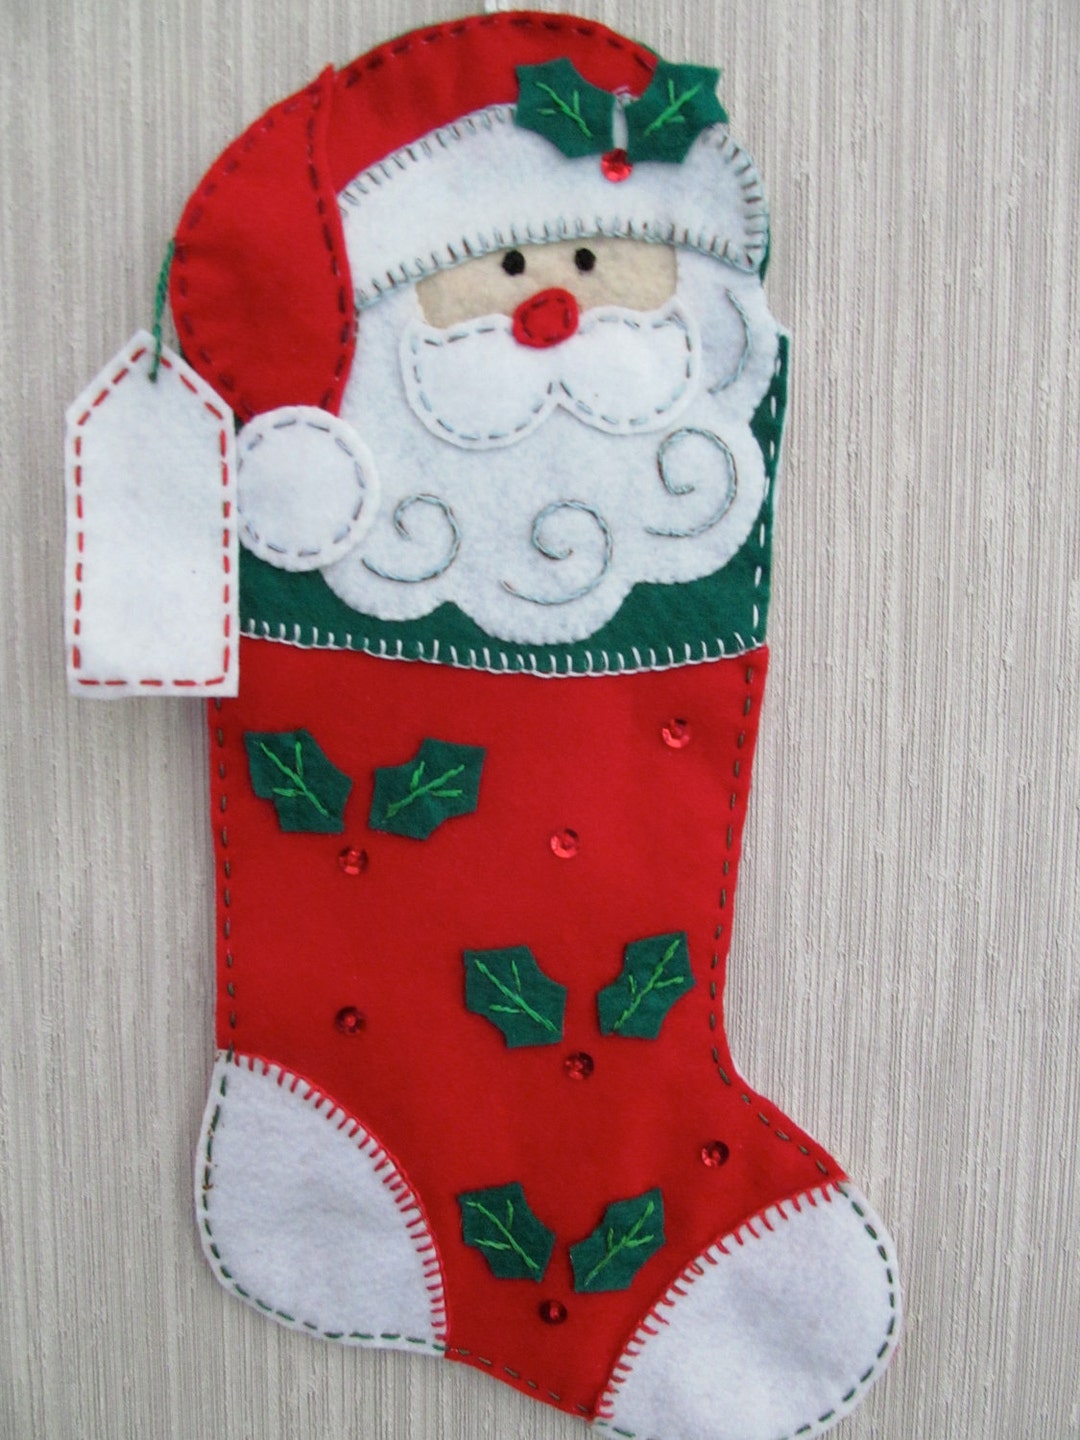 Santa Buddy Completed Handmade Felt Christmas Stocking From Bucilla Kit ...